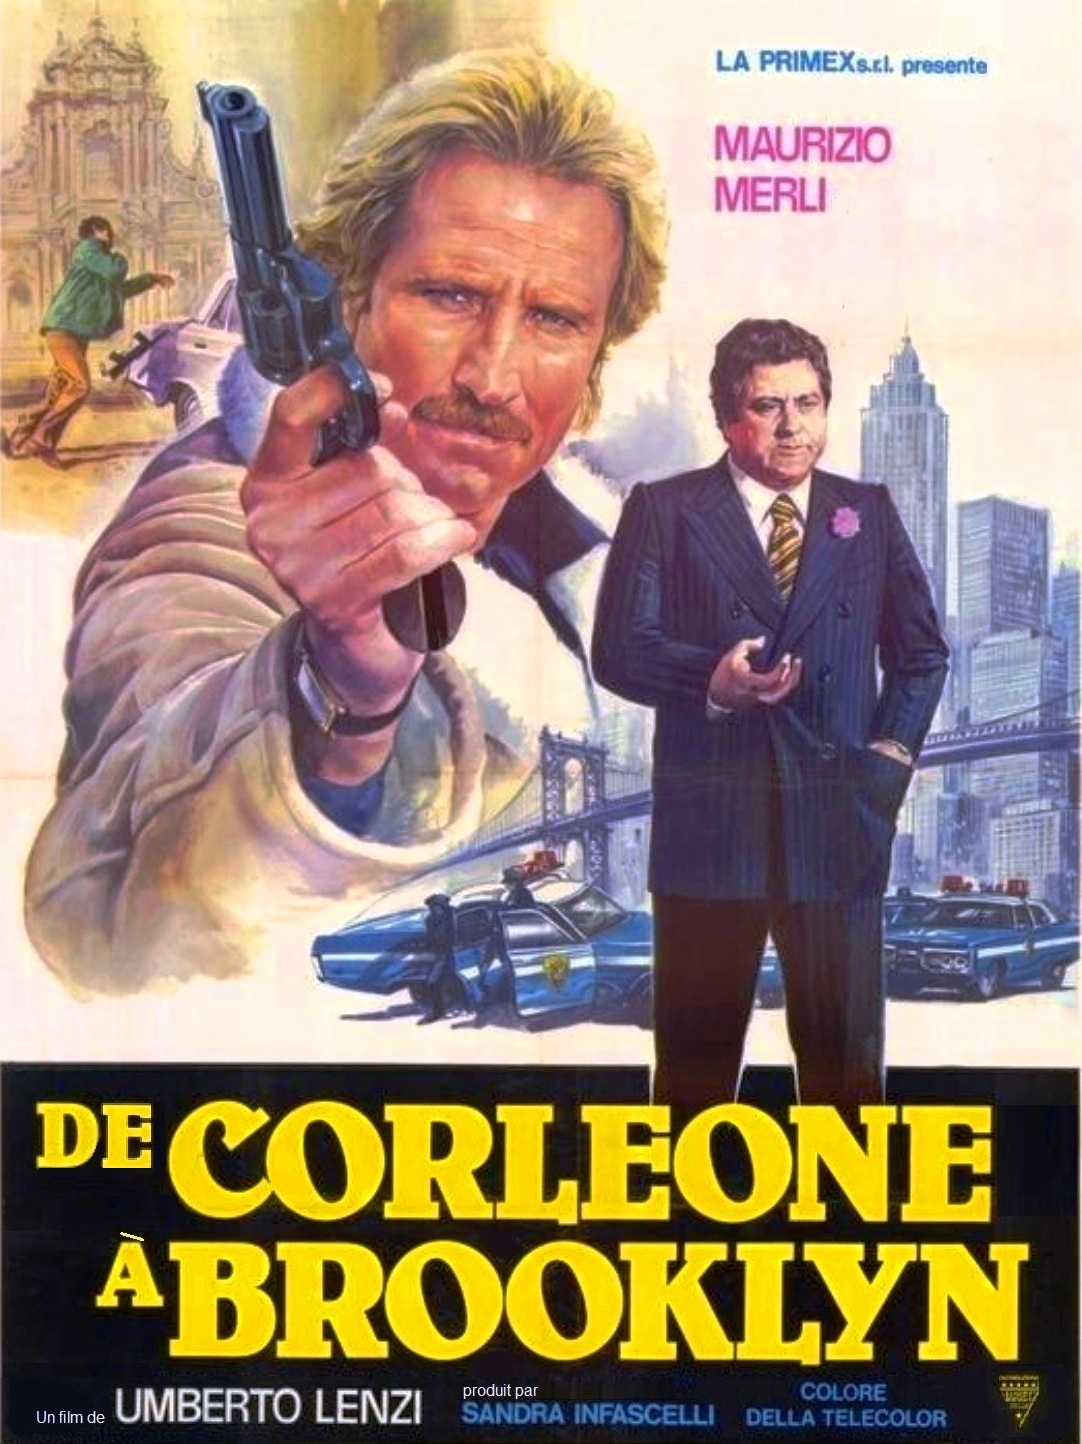 From Corleone to Brooklyn (1979) Screenshot 5